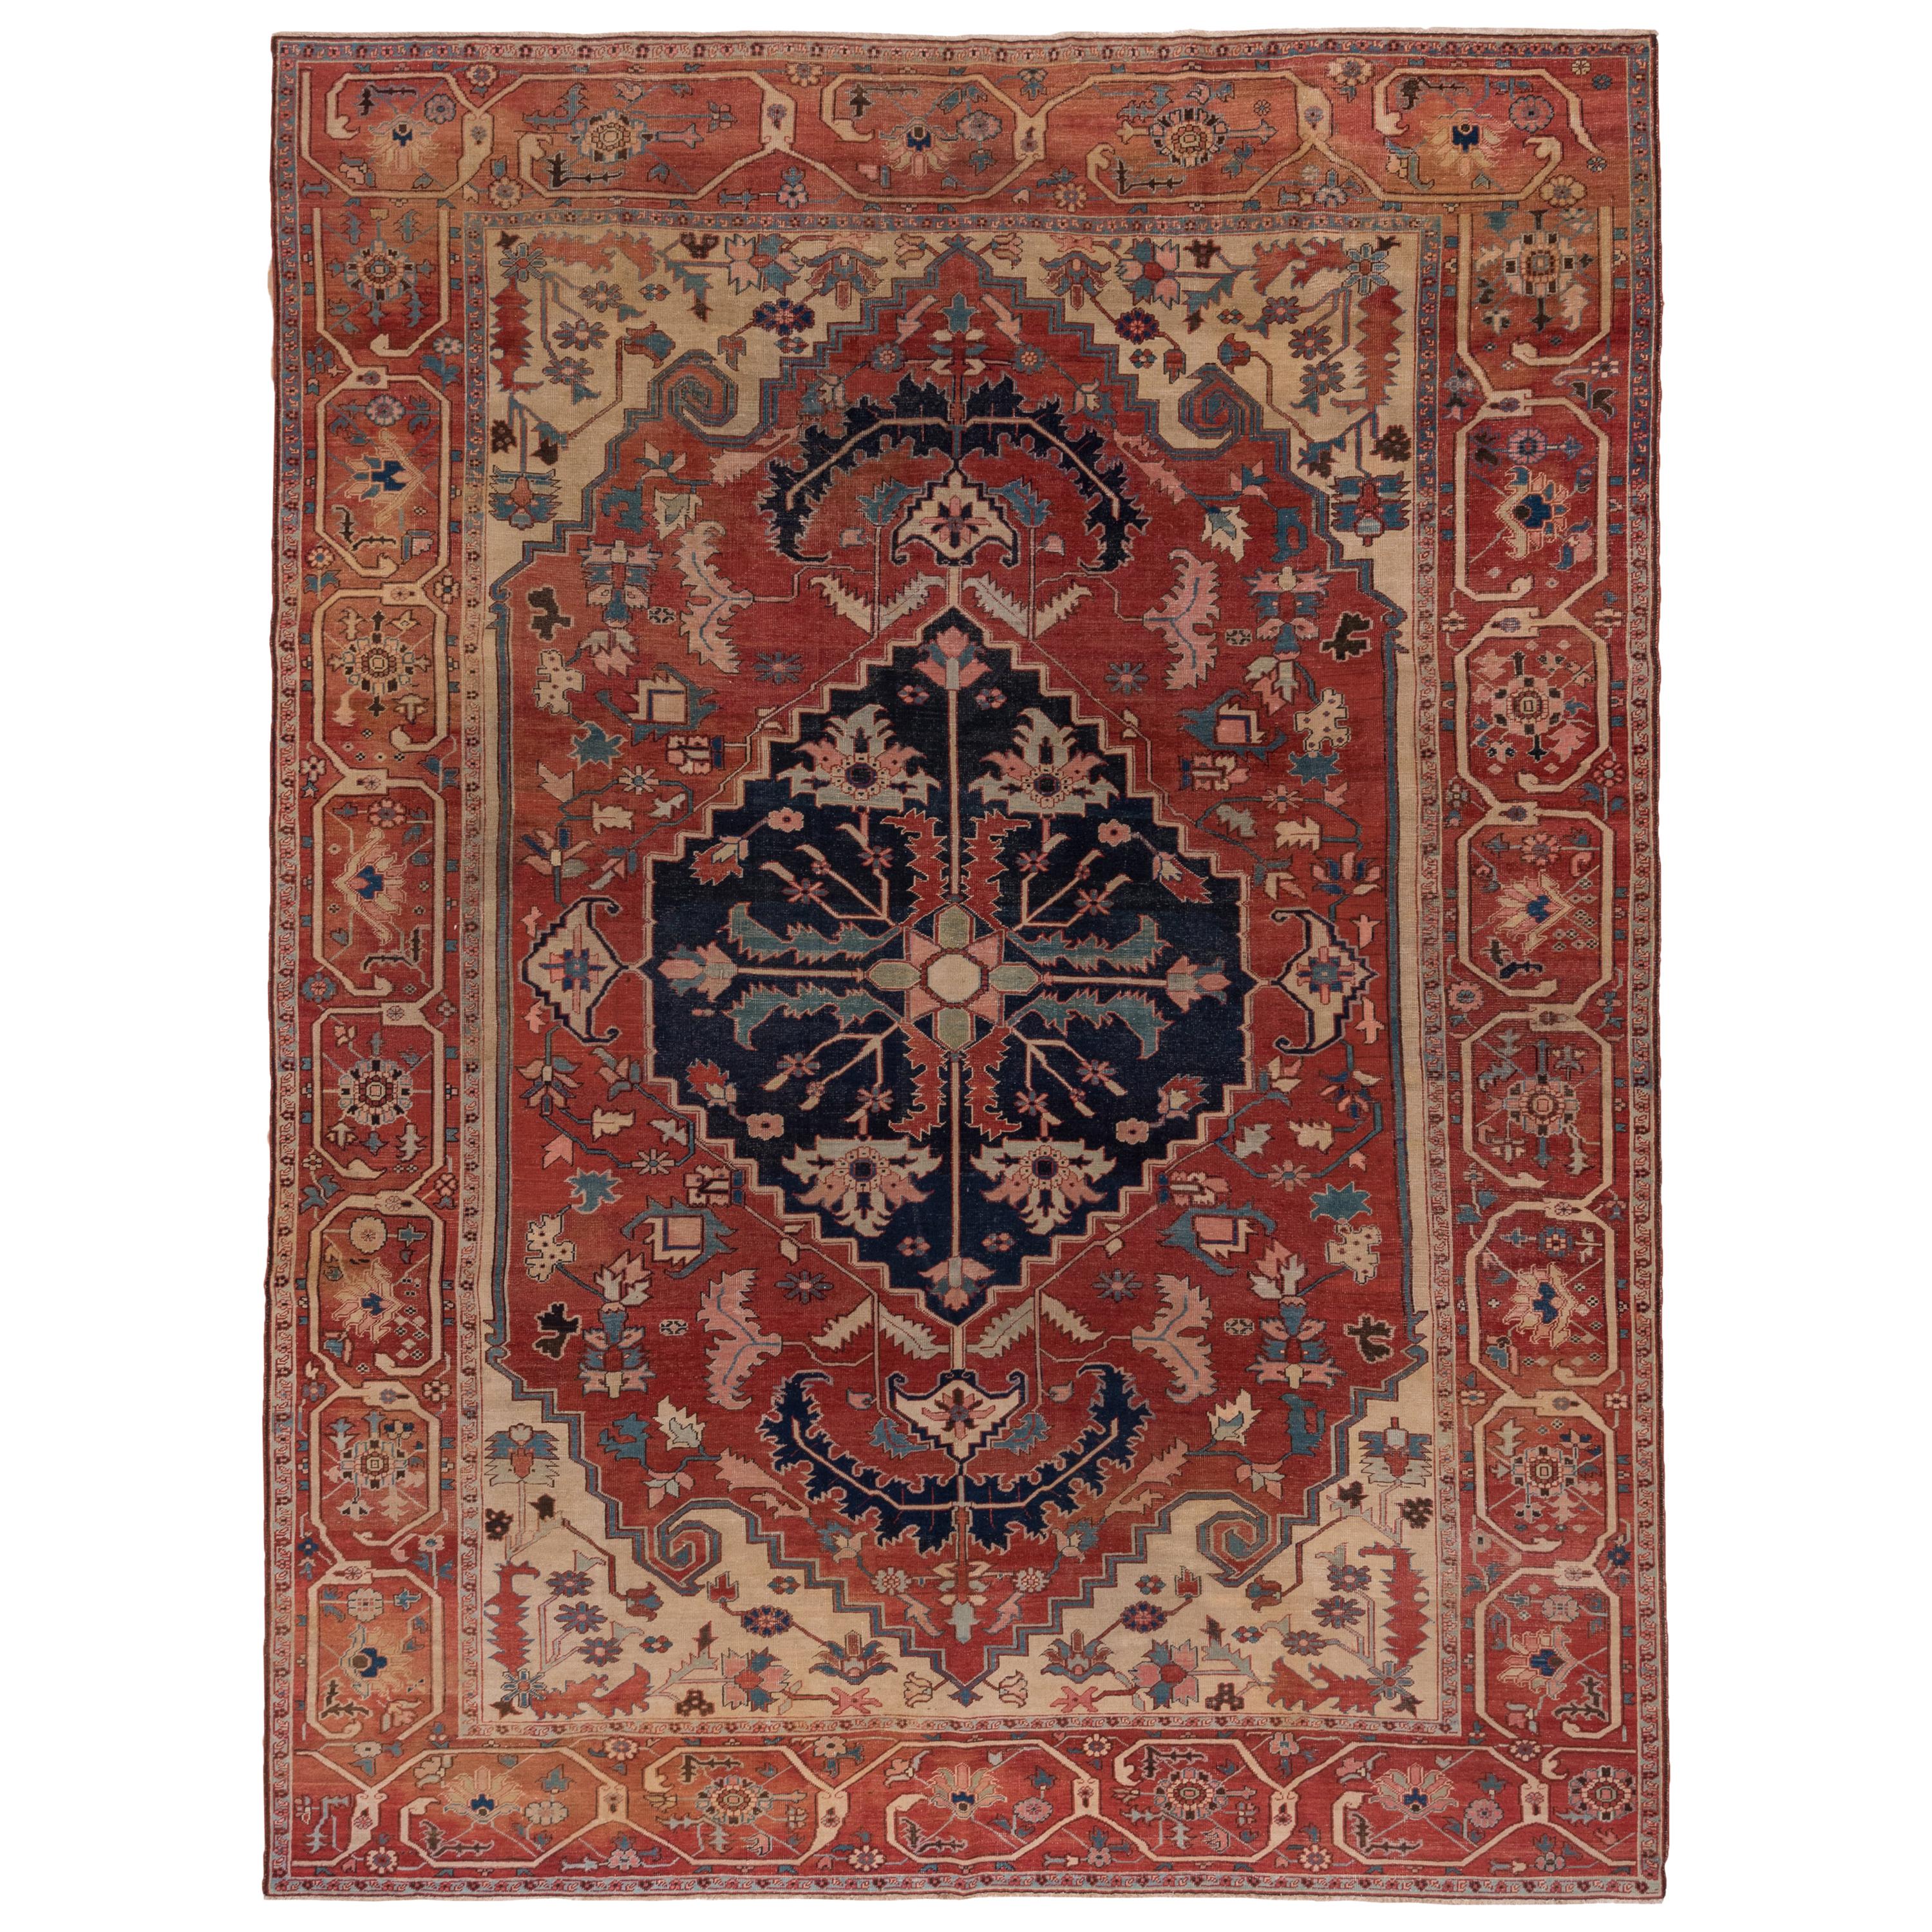 Antique Persian Serapi Carpet, Excellent Condition, Good Colors, circa 1900s